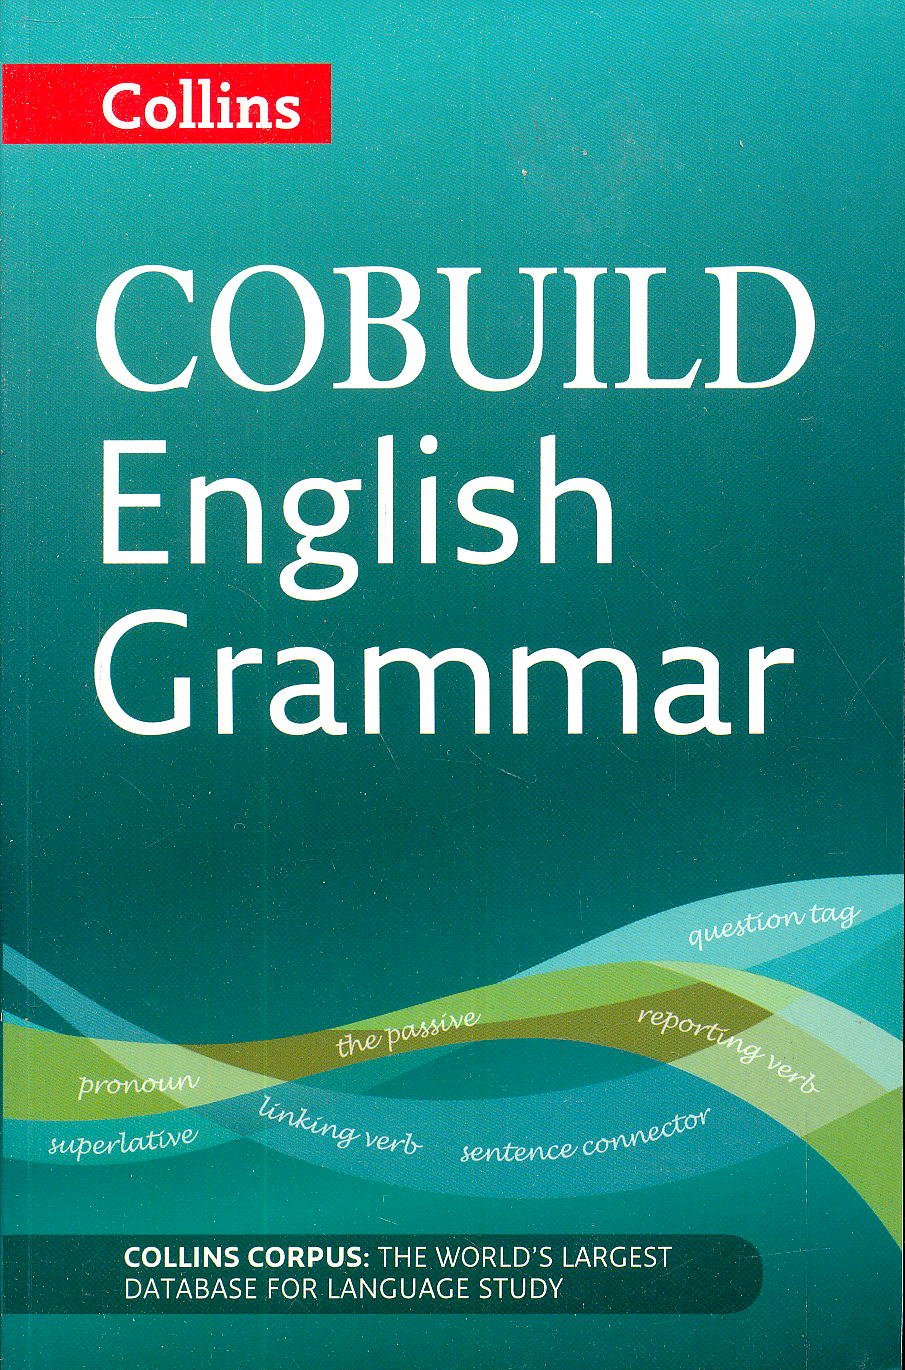 Collins Cobuild English Grammar柯林斯COBUILD英语语法词典 英文原版 azw3格式下载